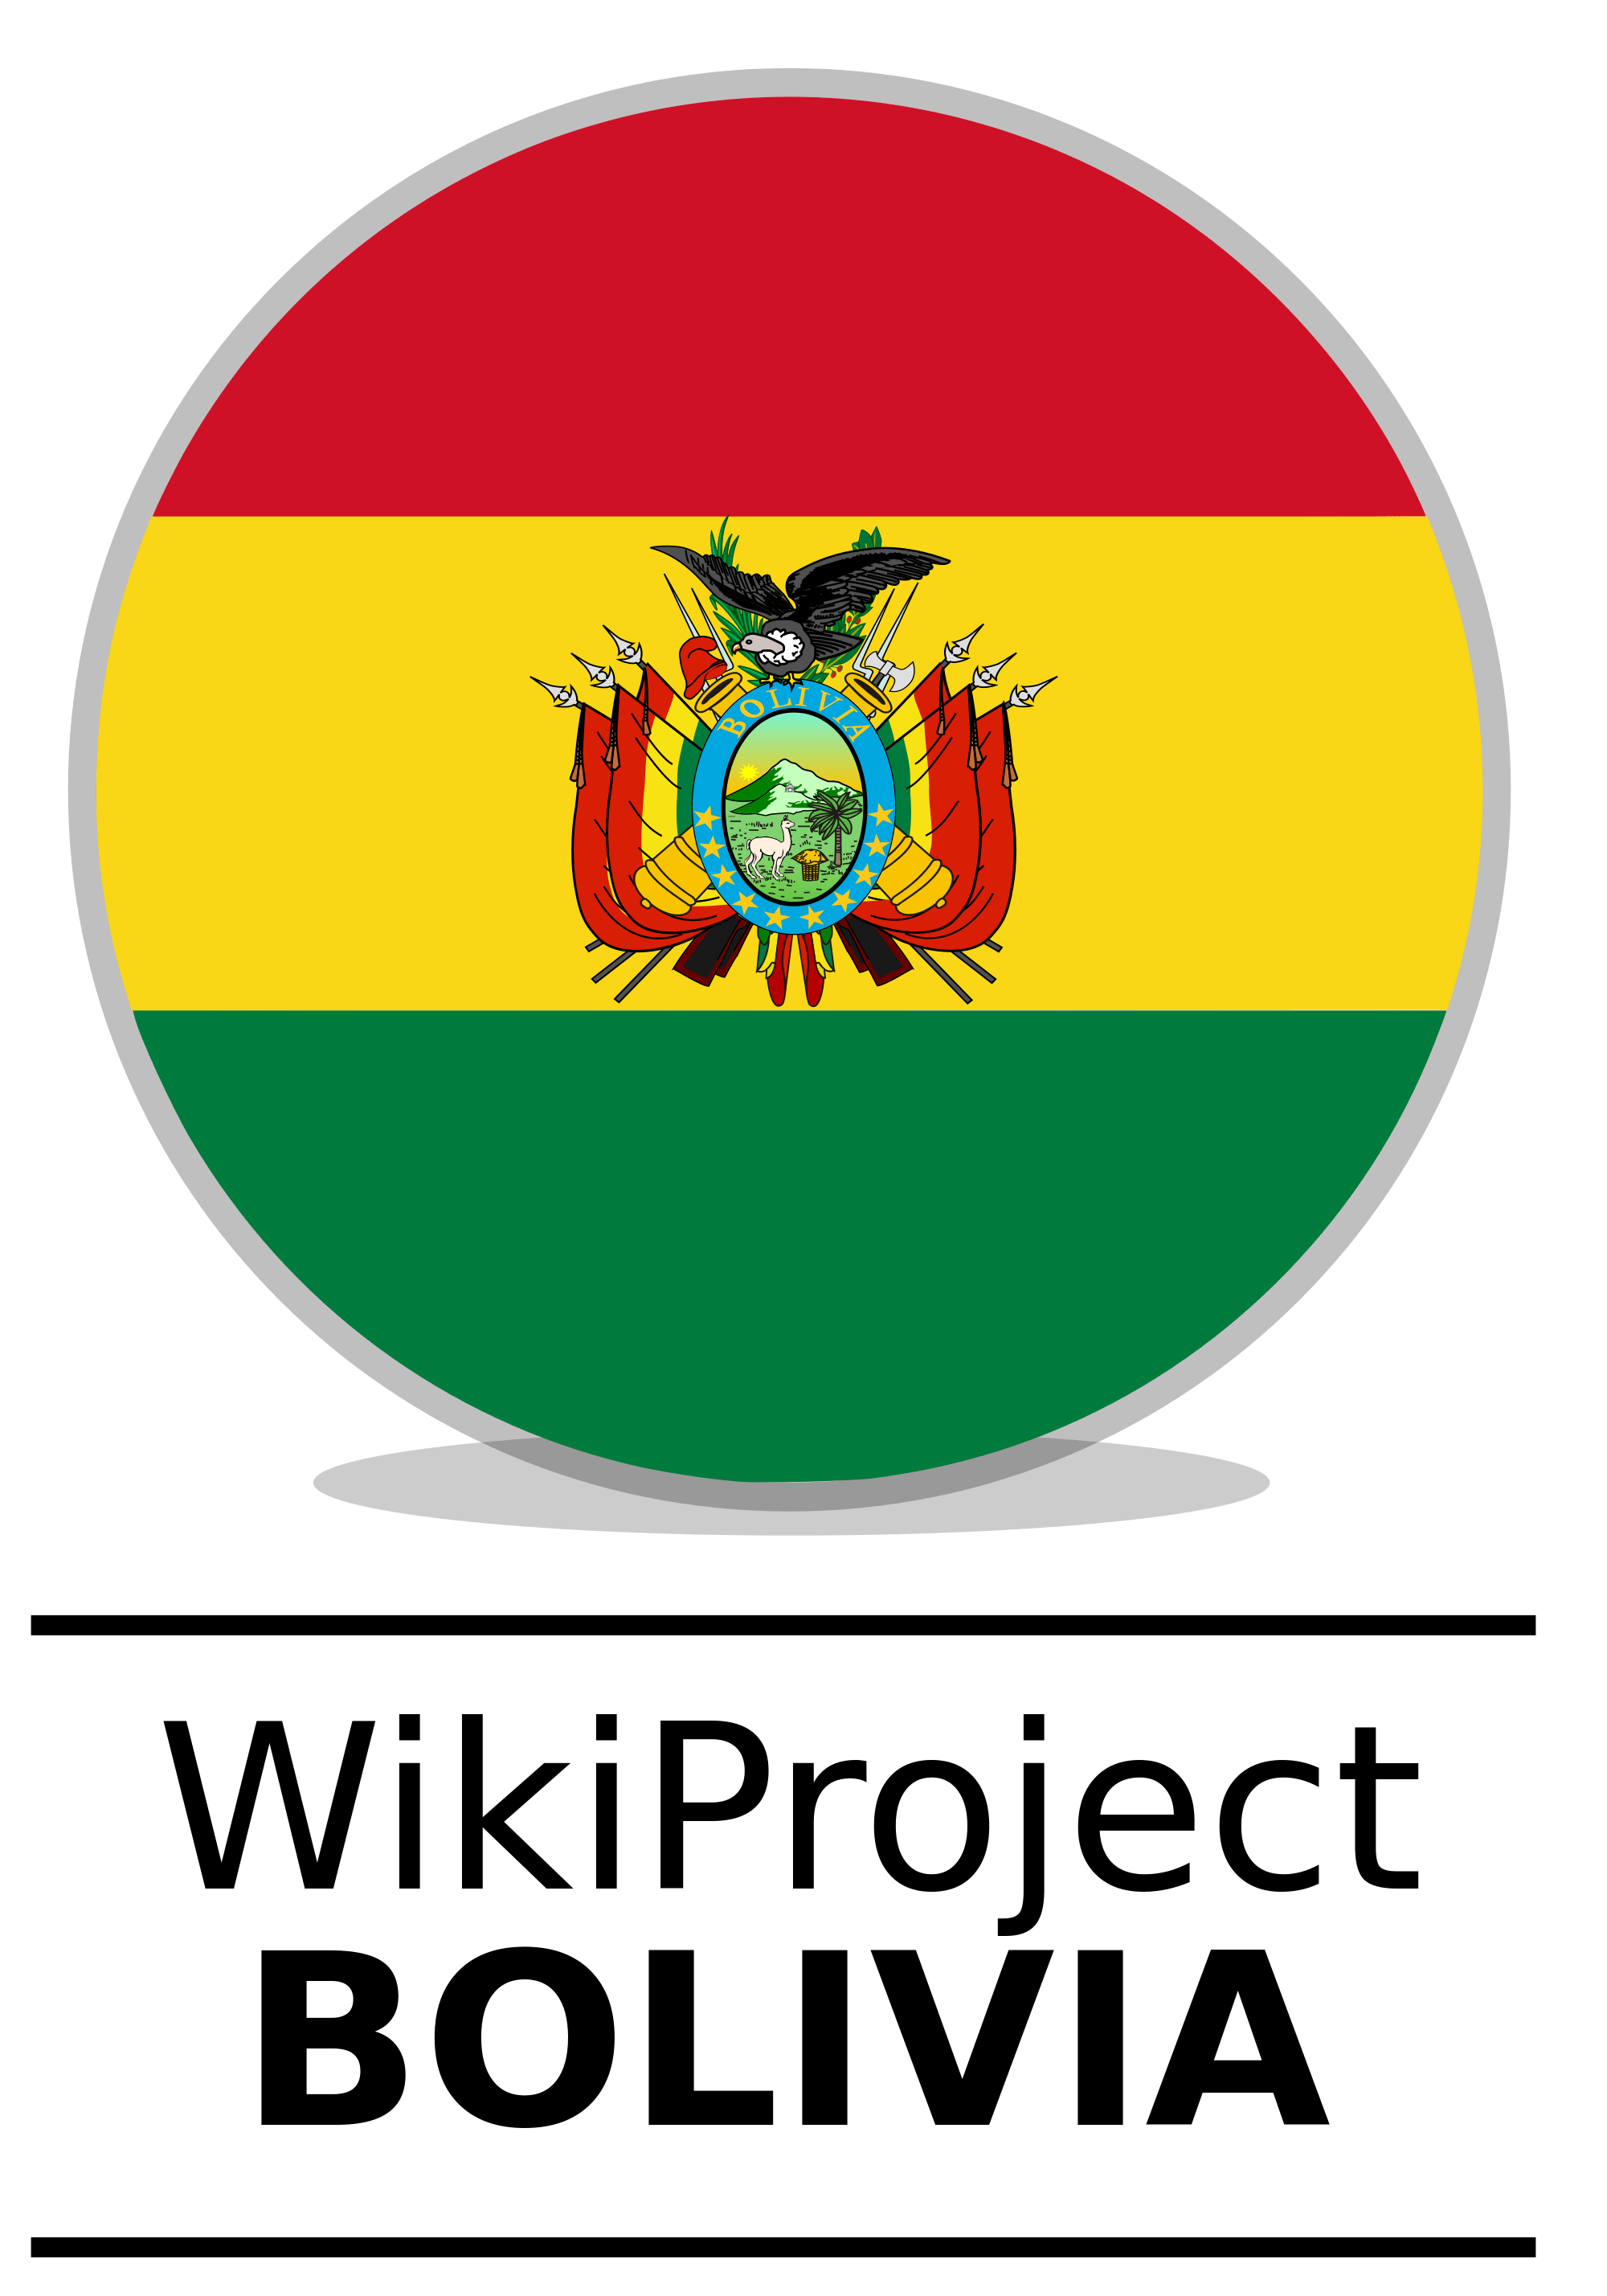 Bolivia Logo - File:WikiProject Bolivia Logo.svg - Wikimedia Commons